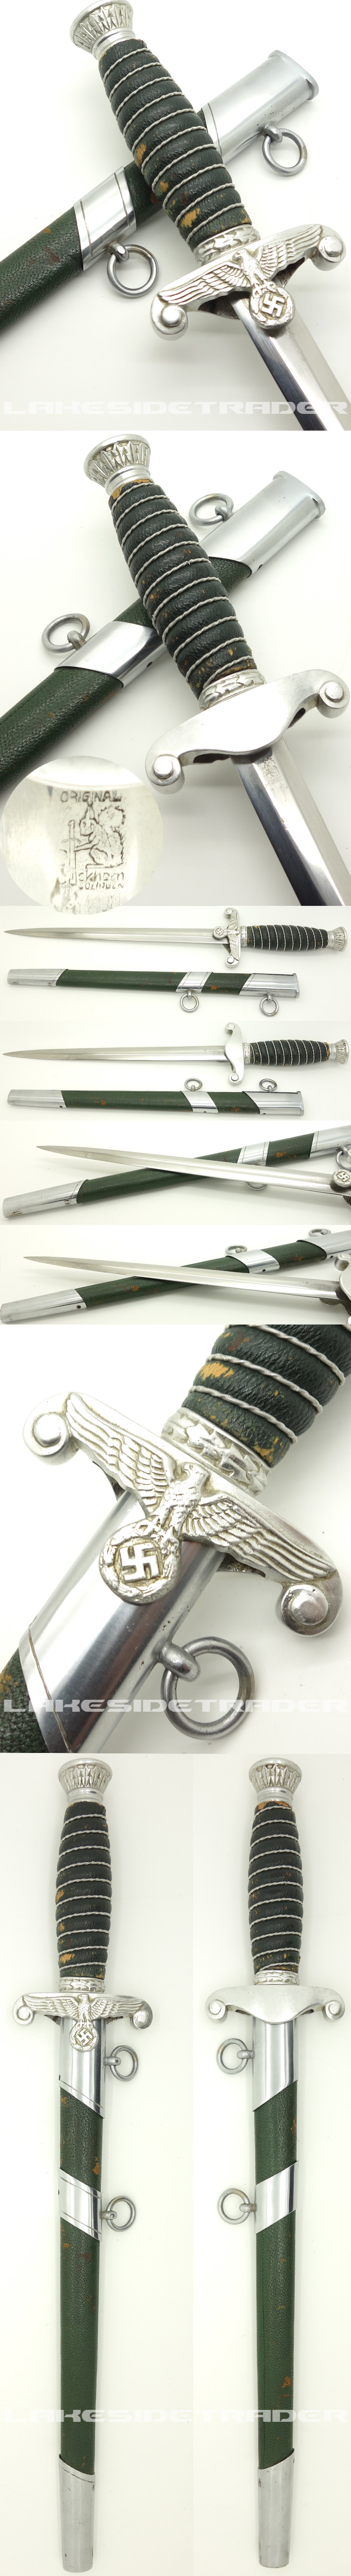 Eickhorn Land Customs Dagger